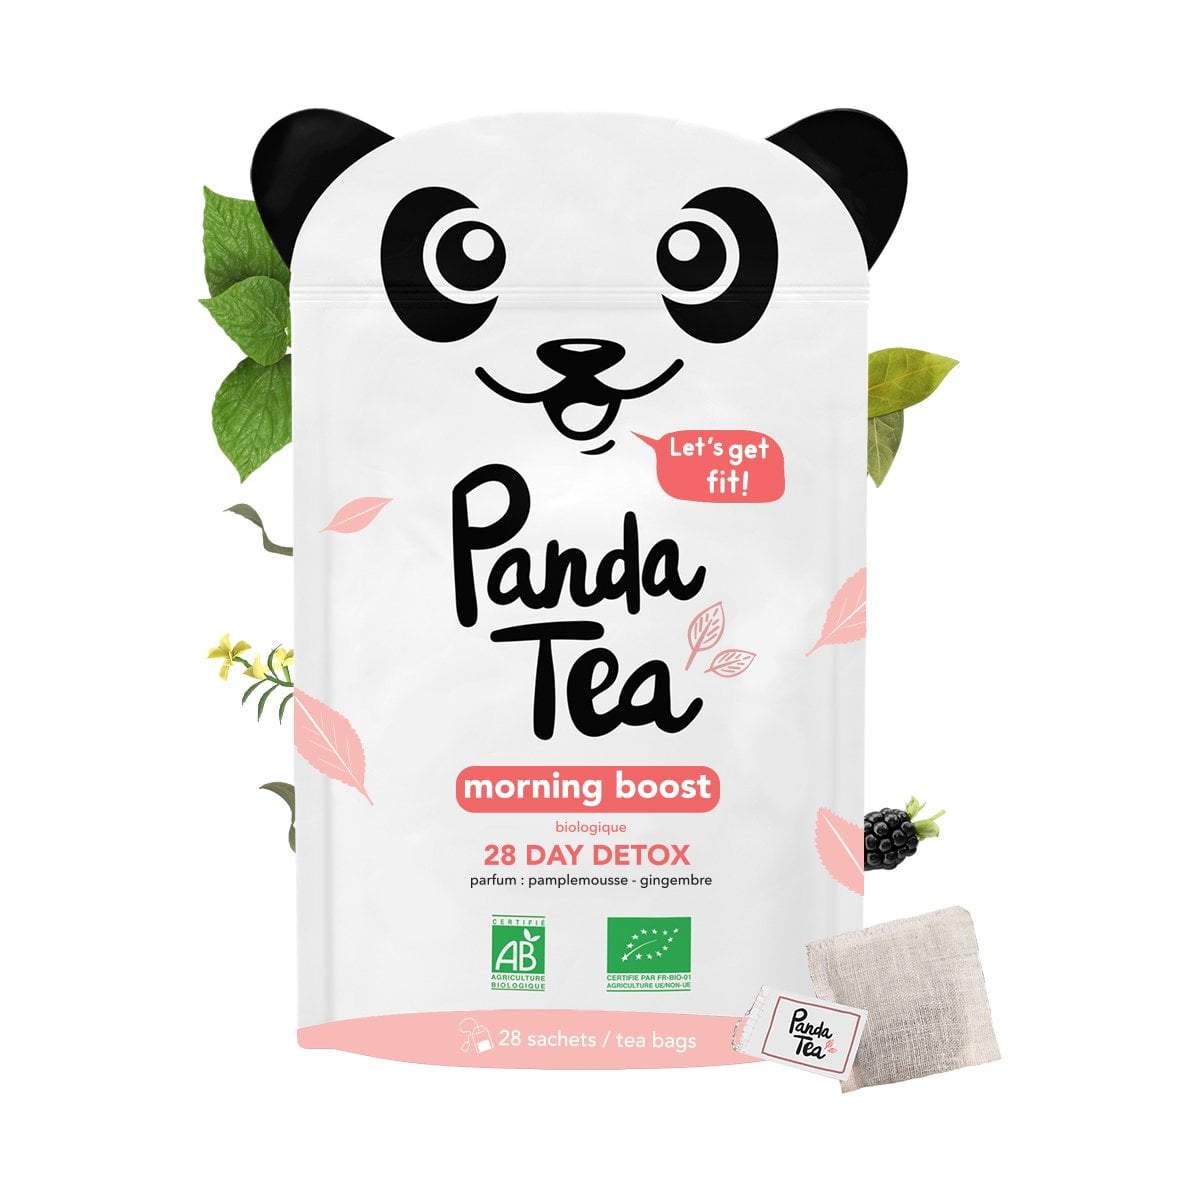 Morning boost Detox Panda Tea - thé détox